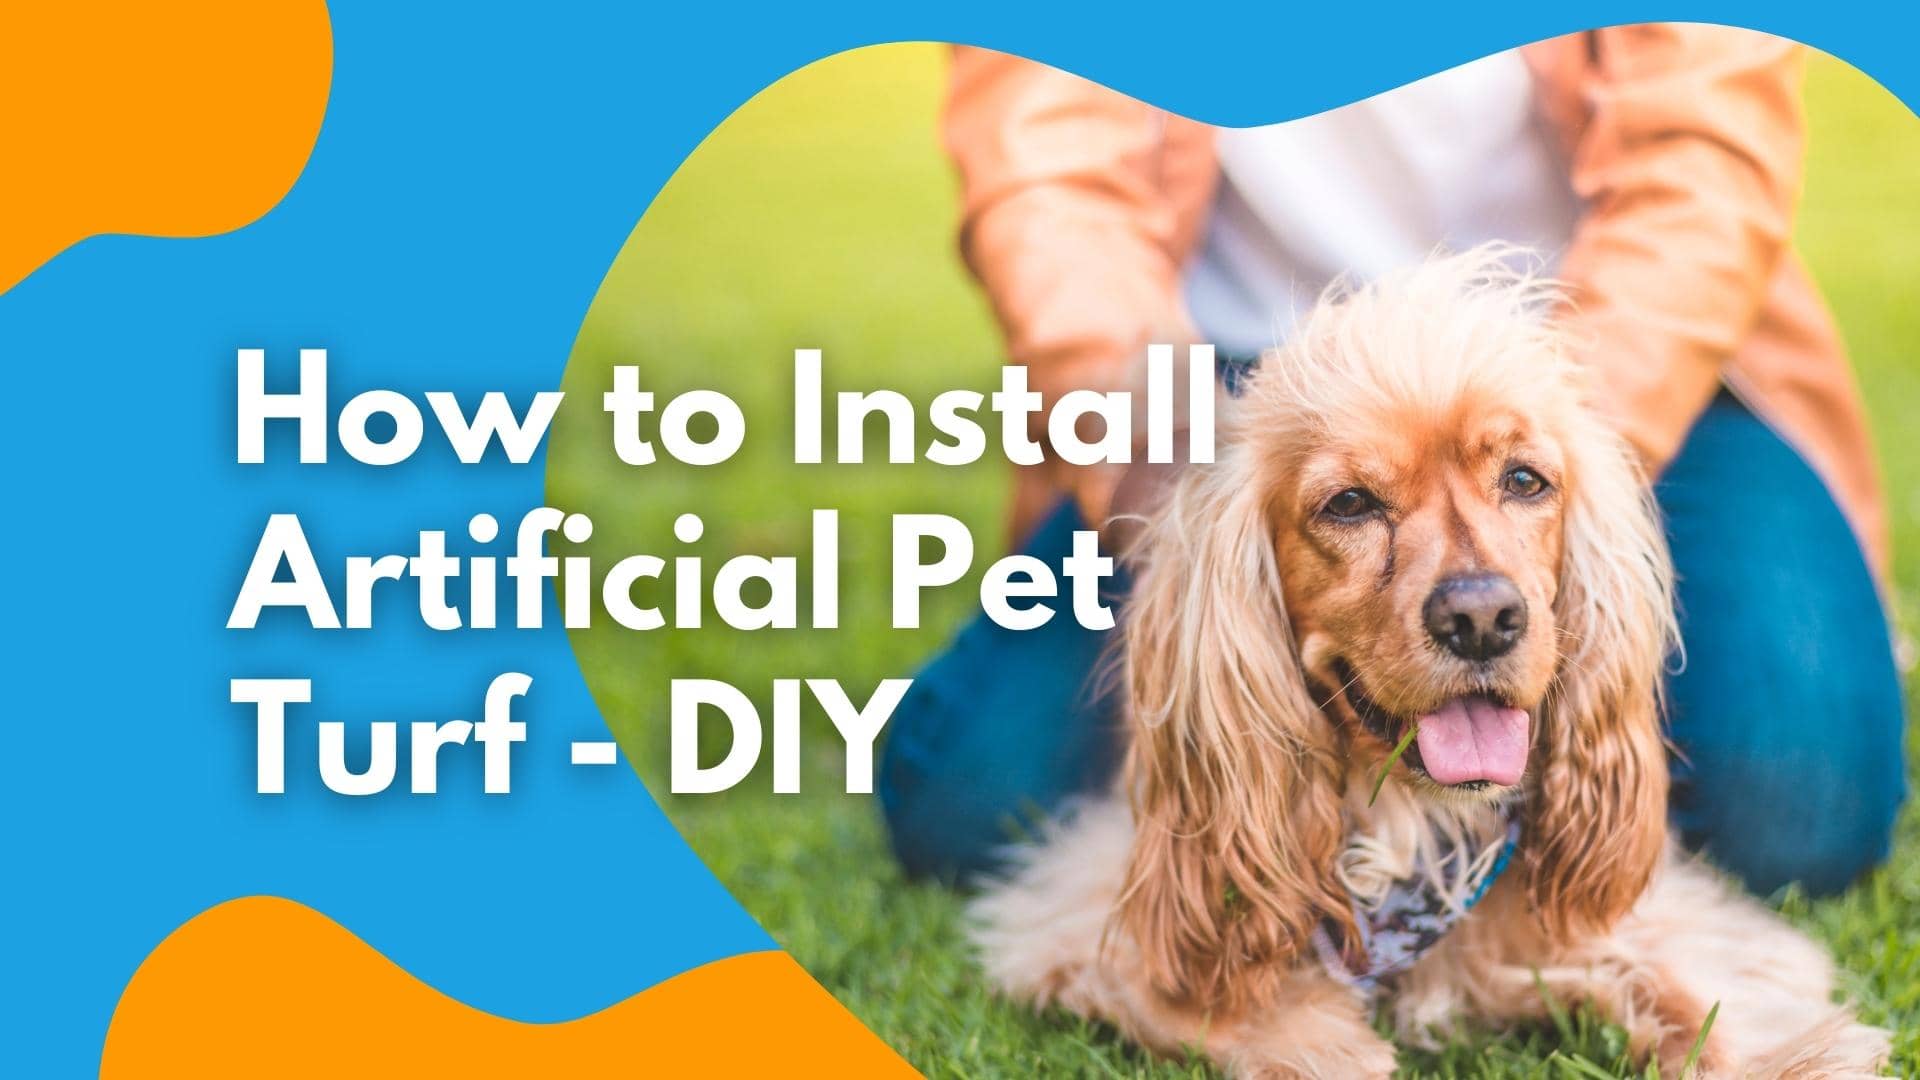 How to Install Artificial Pet Turf - DIY